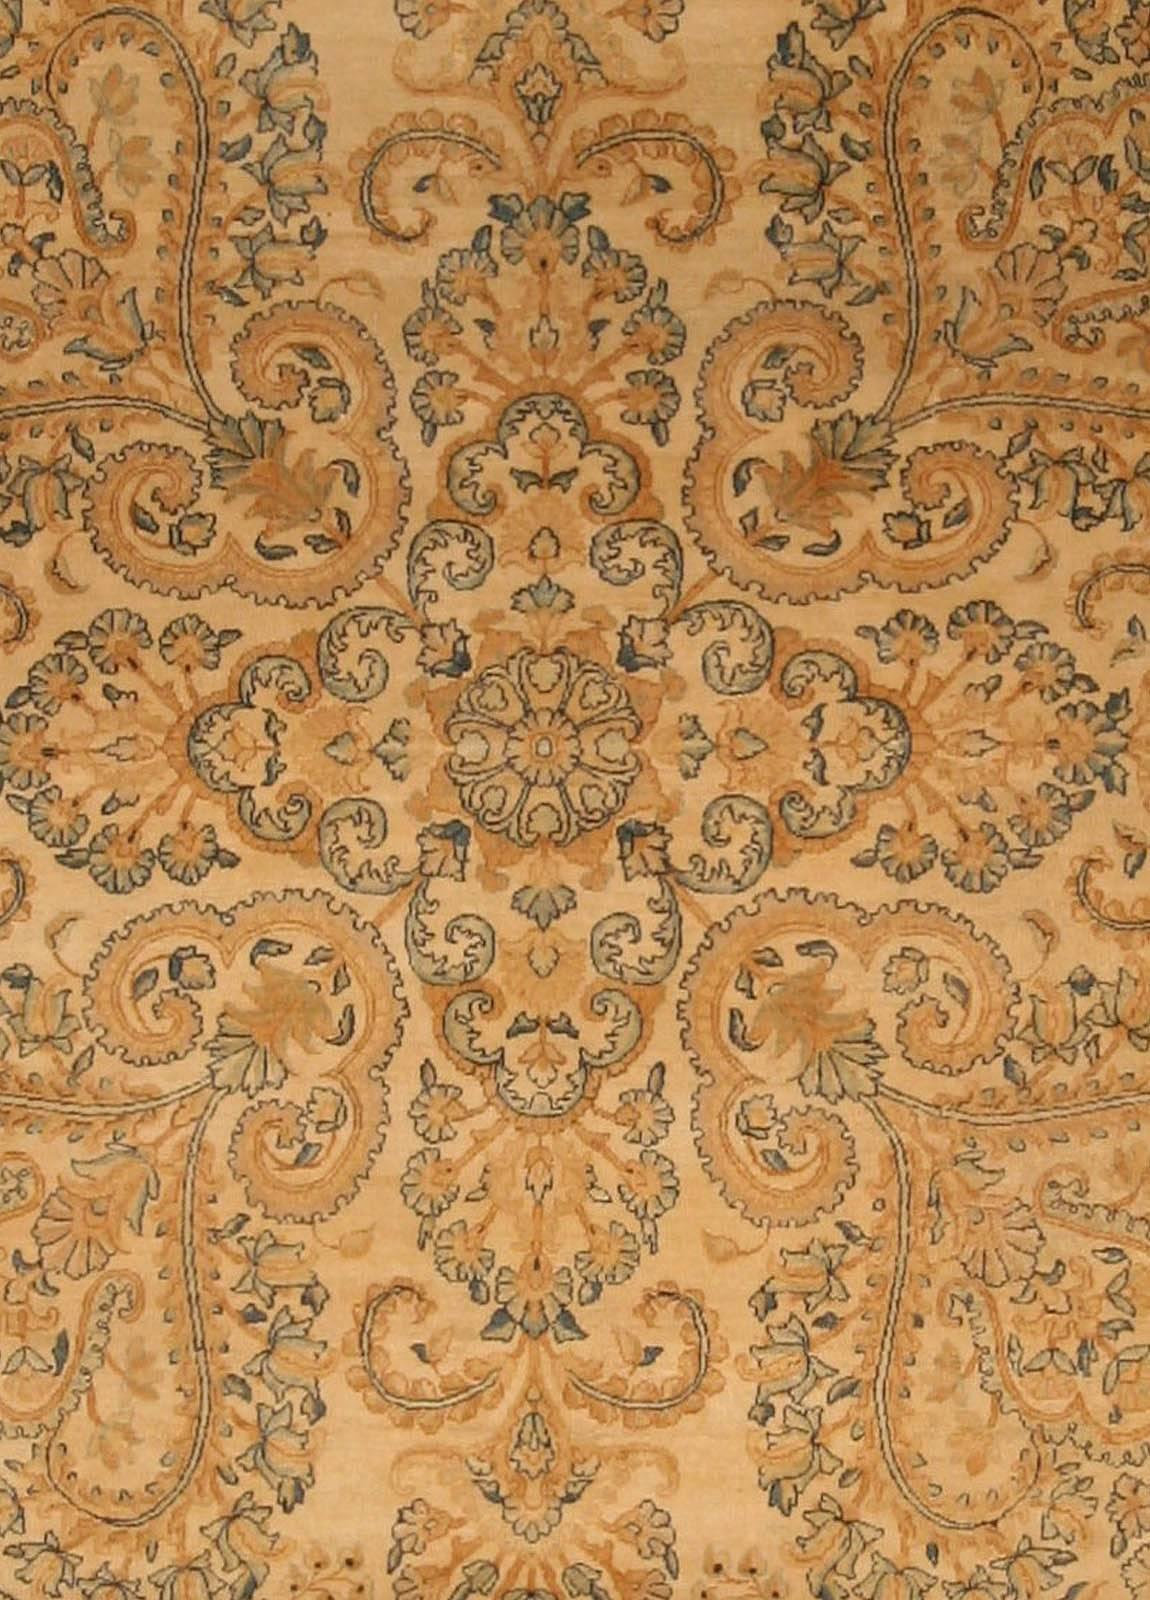 Antique Persian Kirman Camel handmade wool rug
Size: 13'5